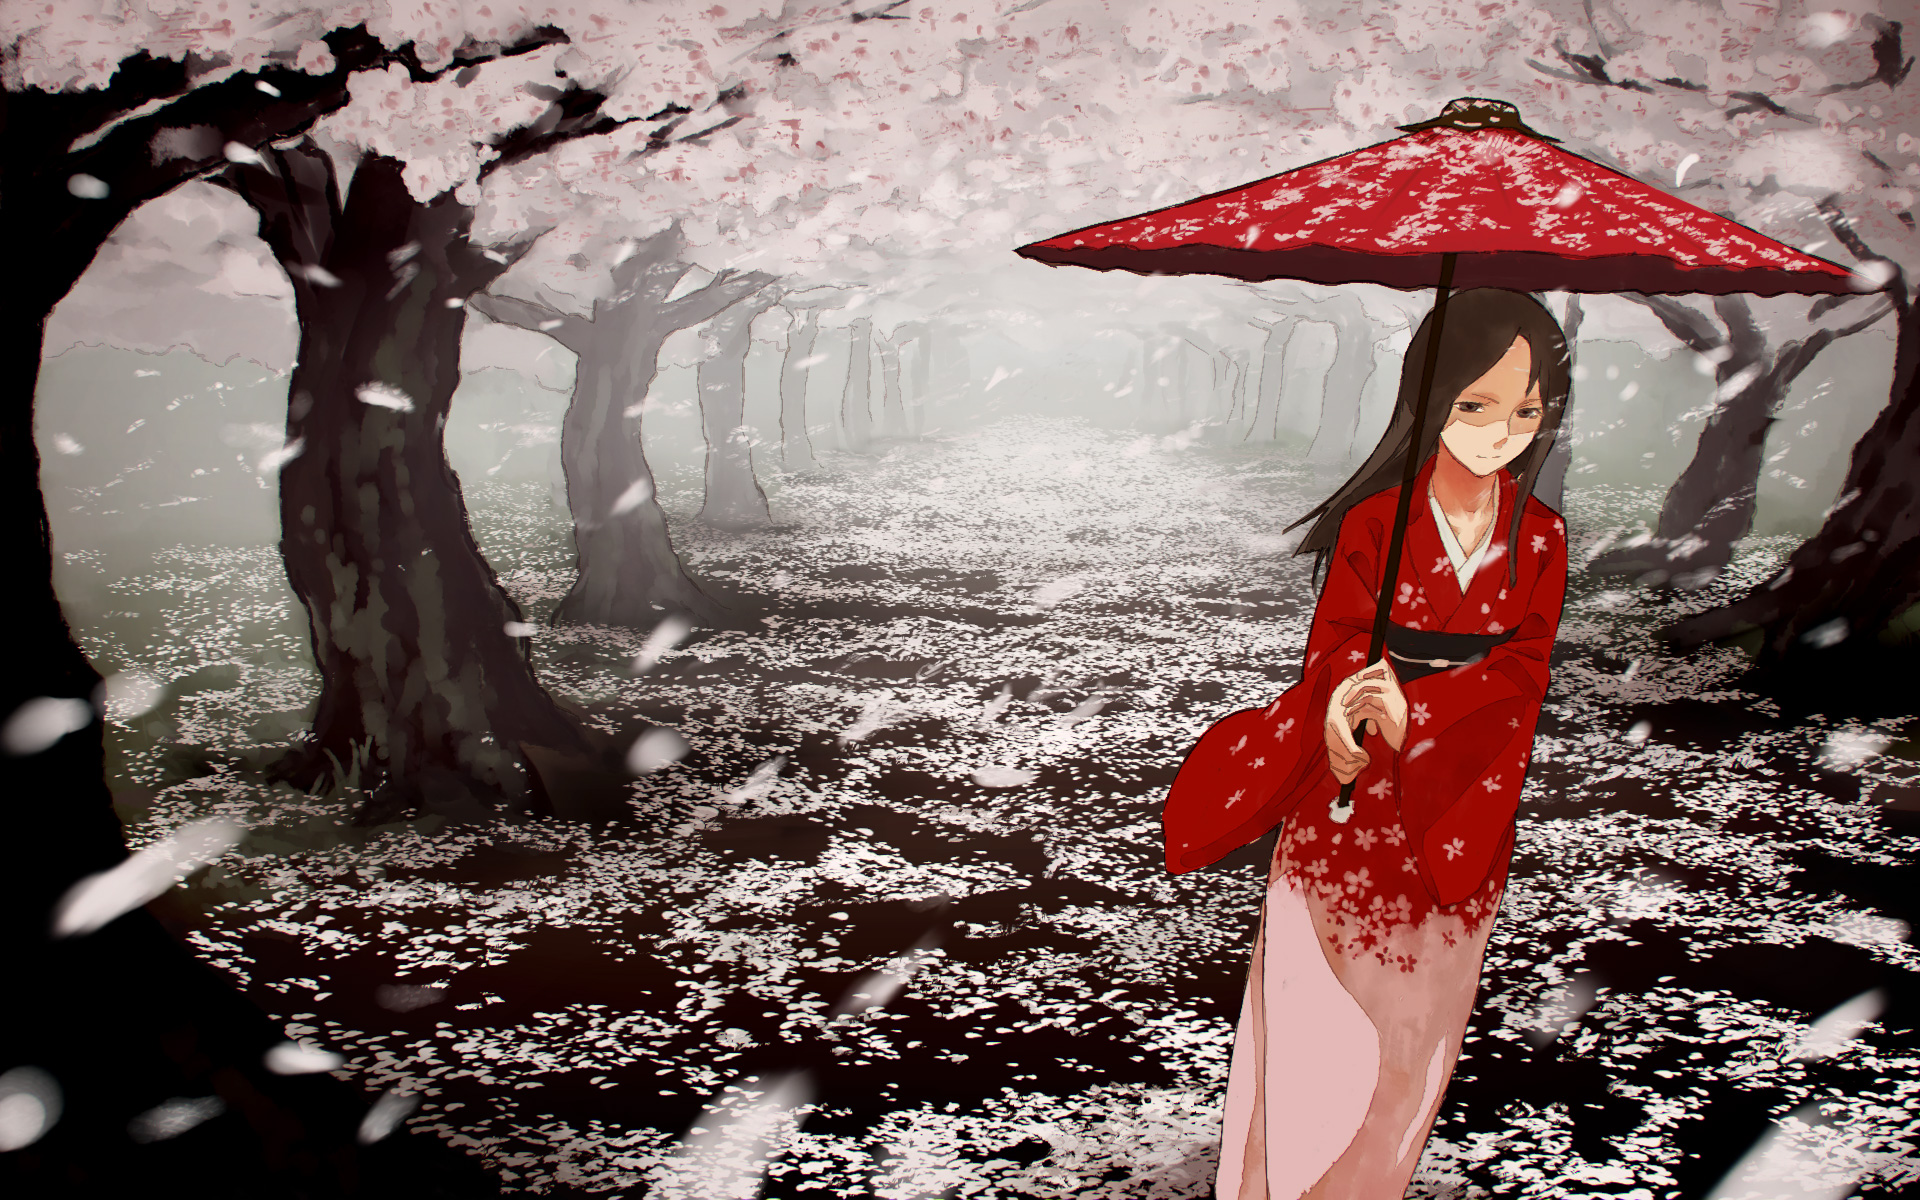 Sad Anime Girl Wallpaper | 1920x1200 | ID:30391